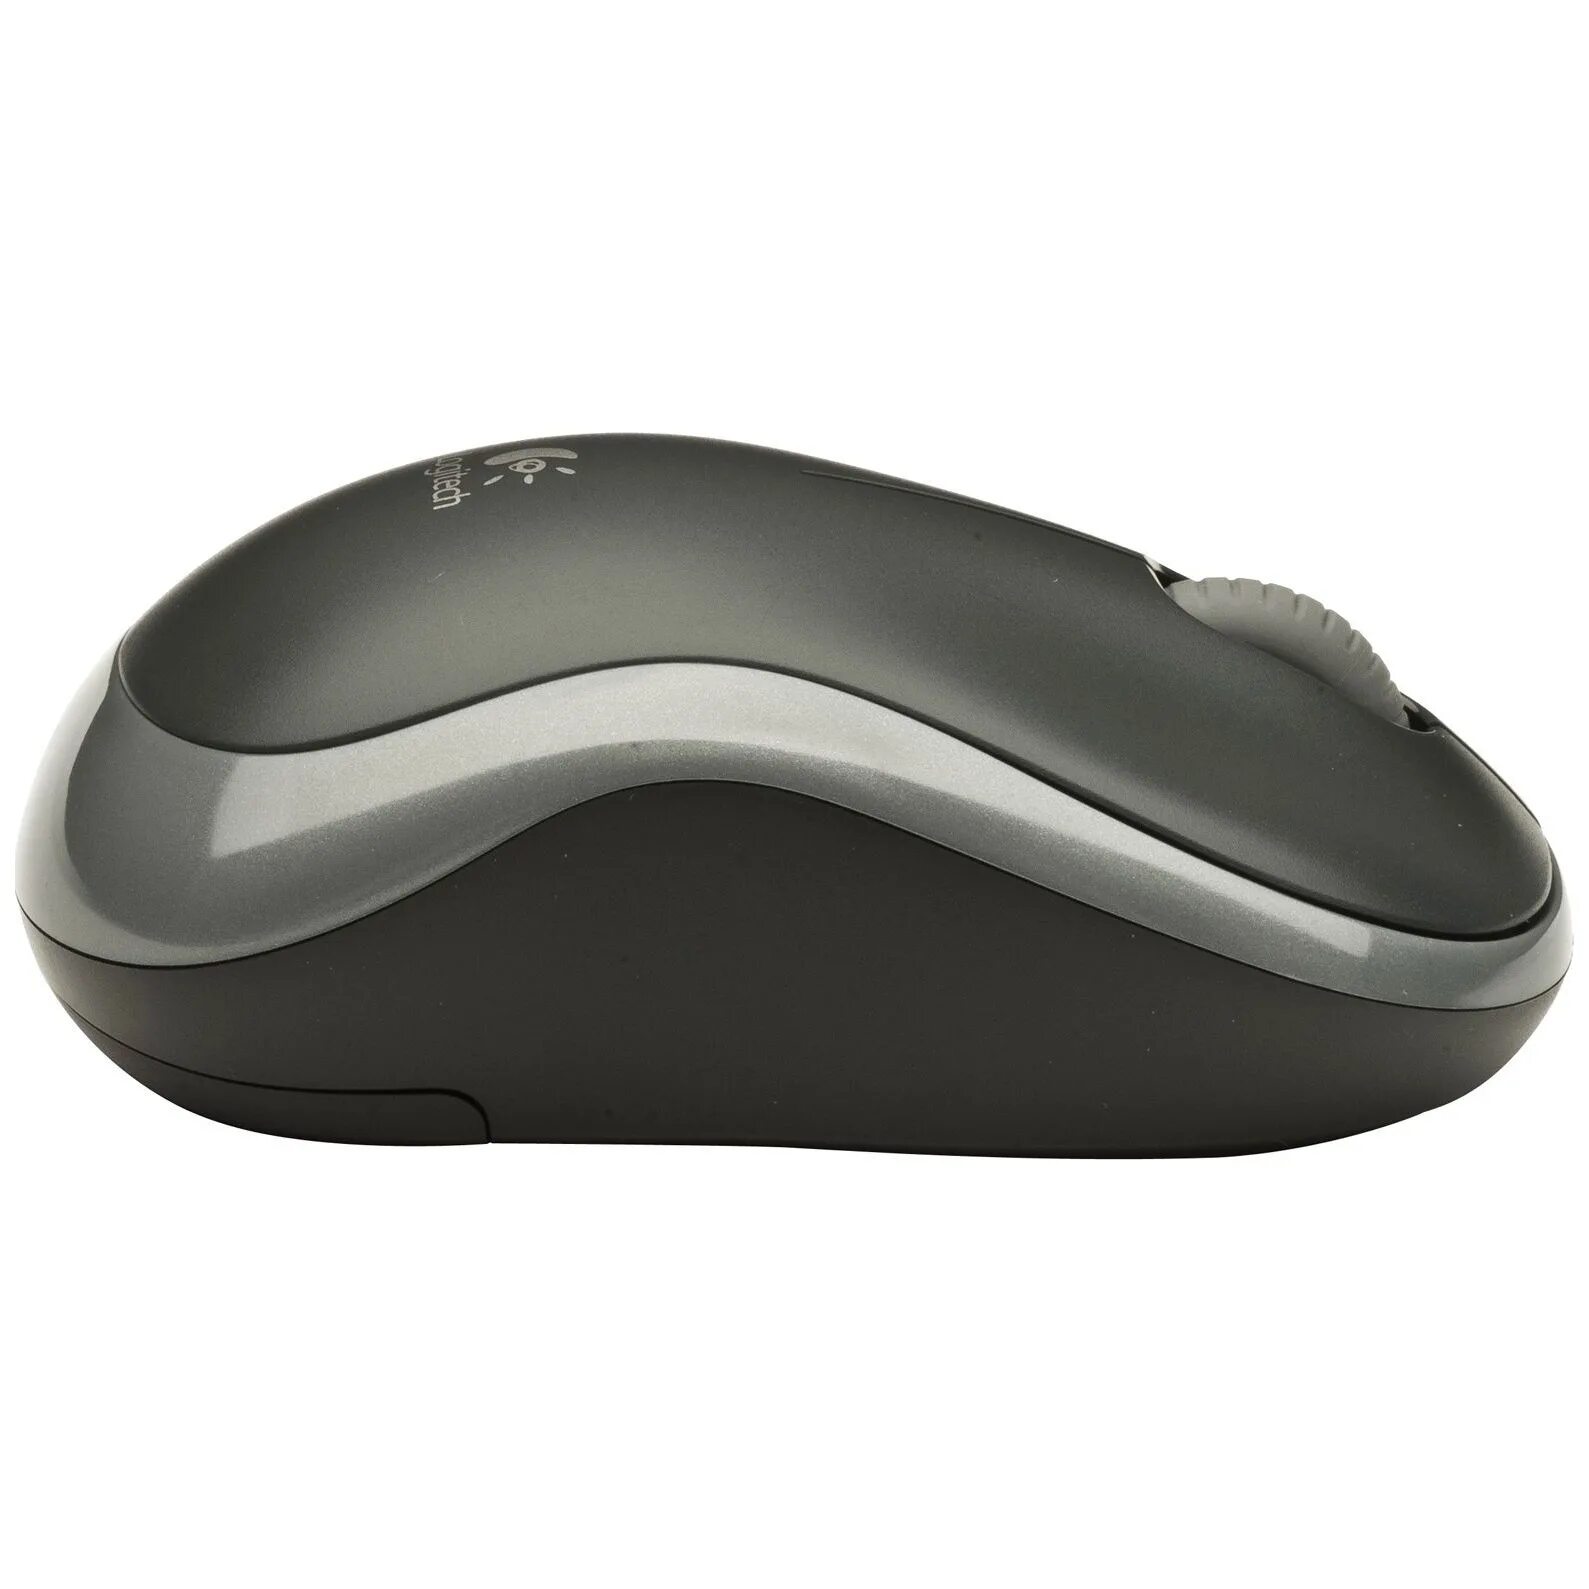 Logitech m185 Grey. Мышка Logitech m185. Мышка беспроводная Logitech m185. Компьютерная мышь Logitech Wireless Mouse m185 Grey-Black (910-002238).